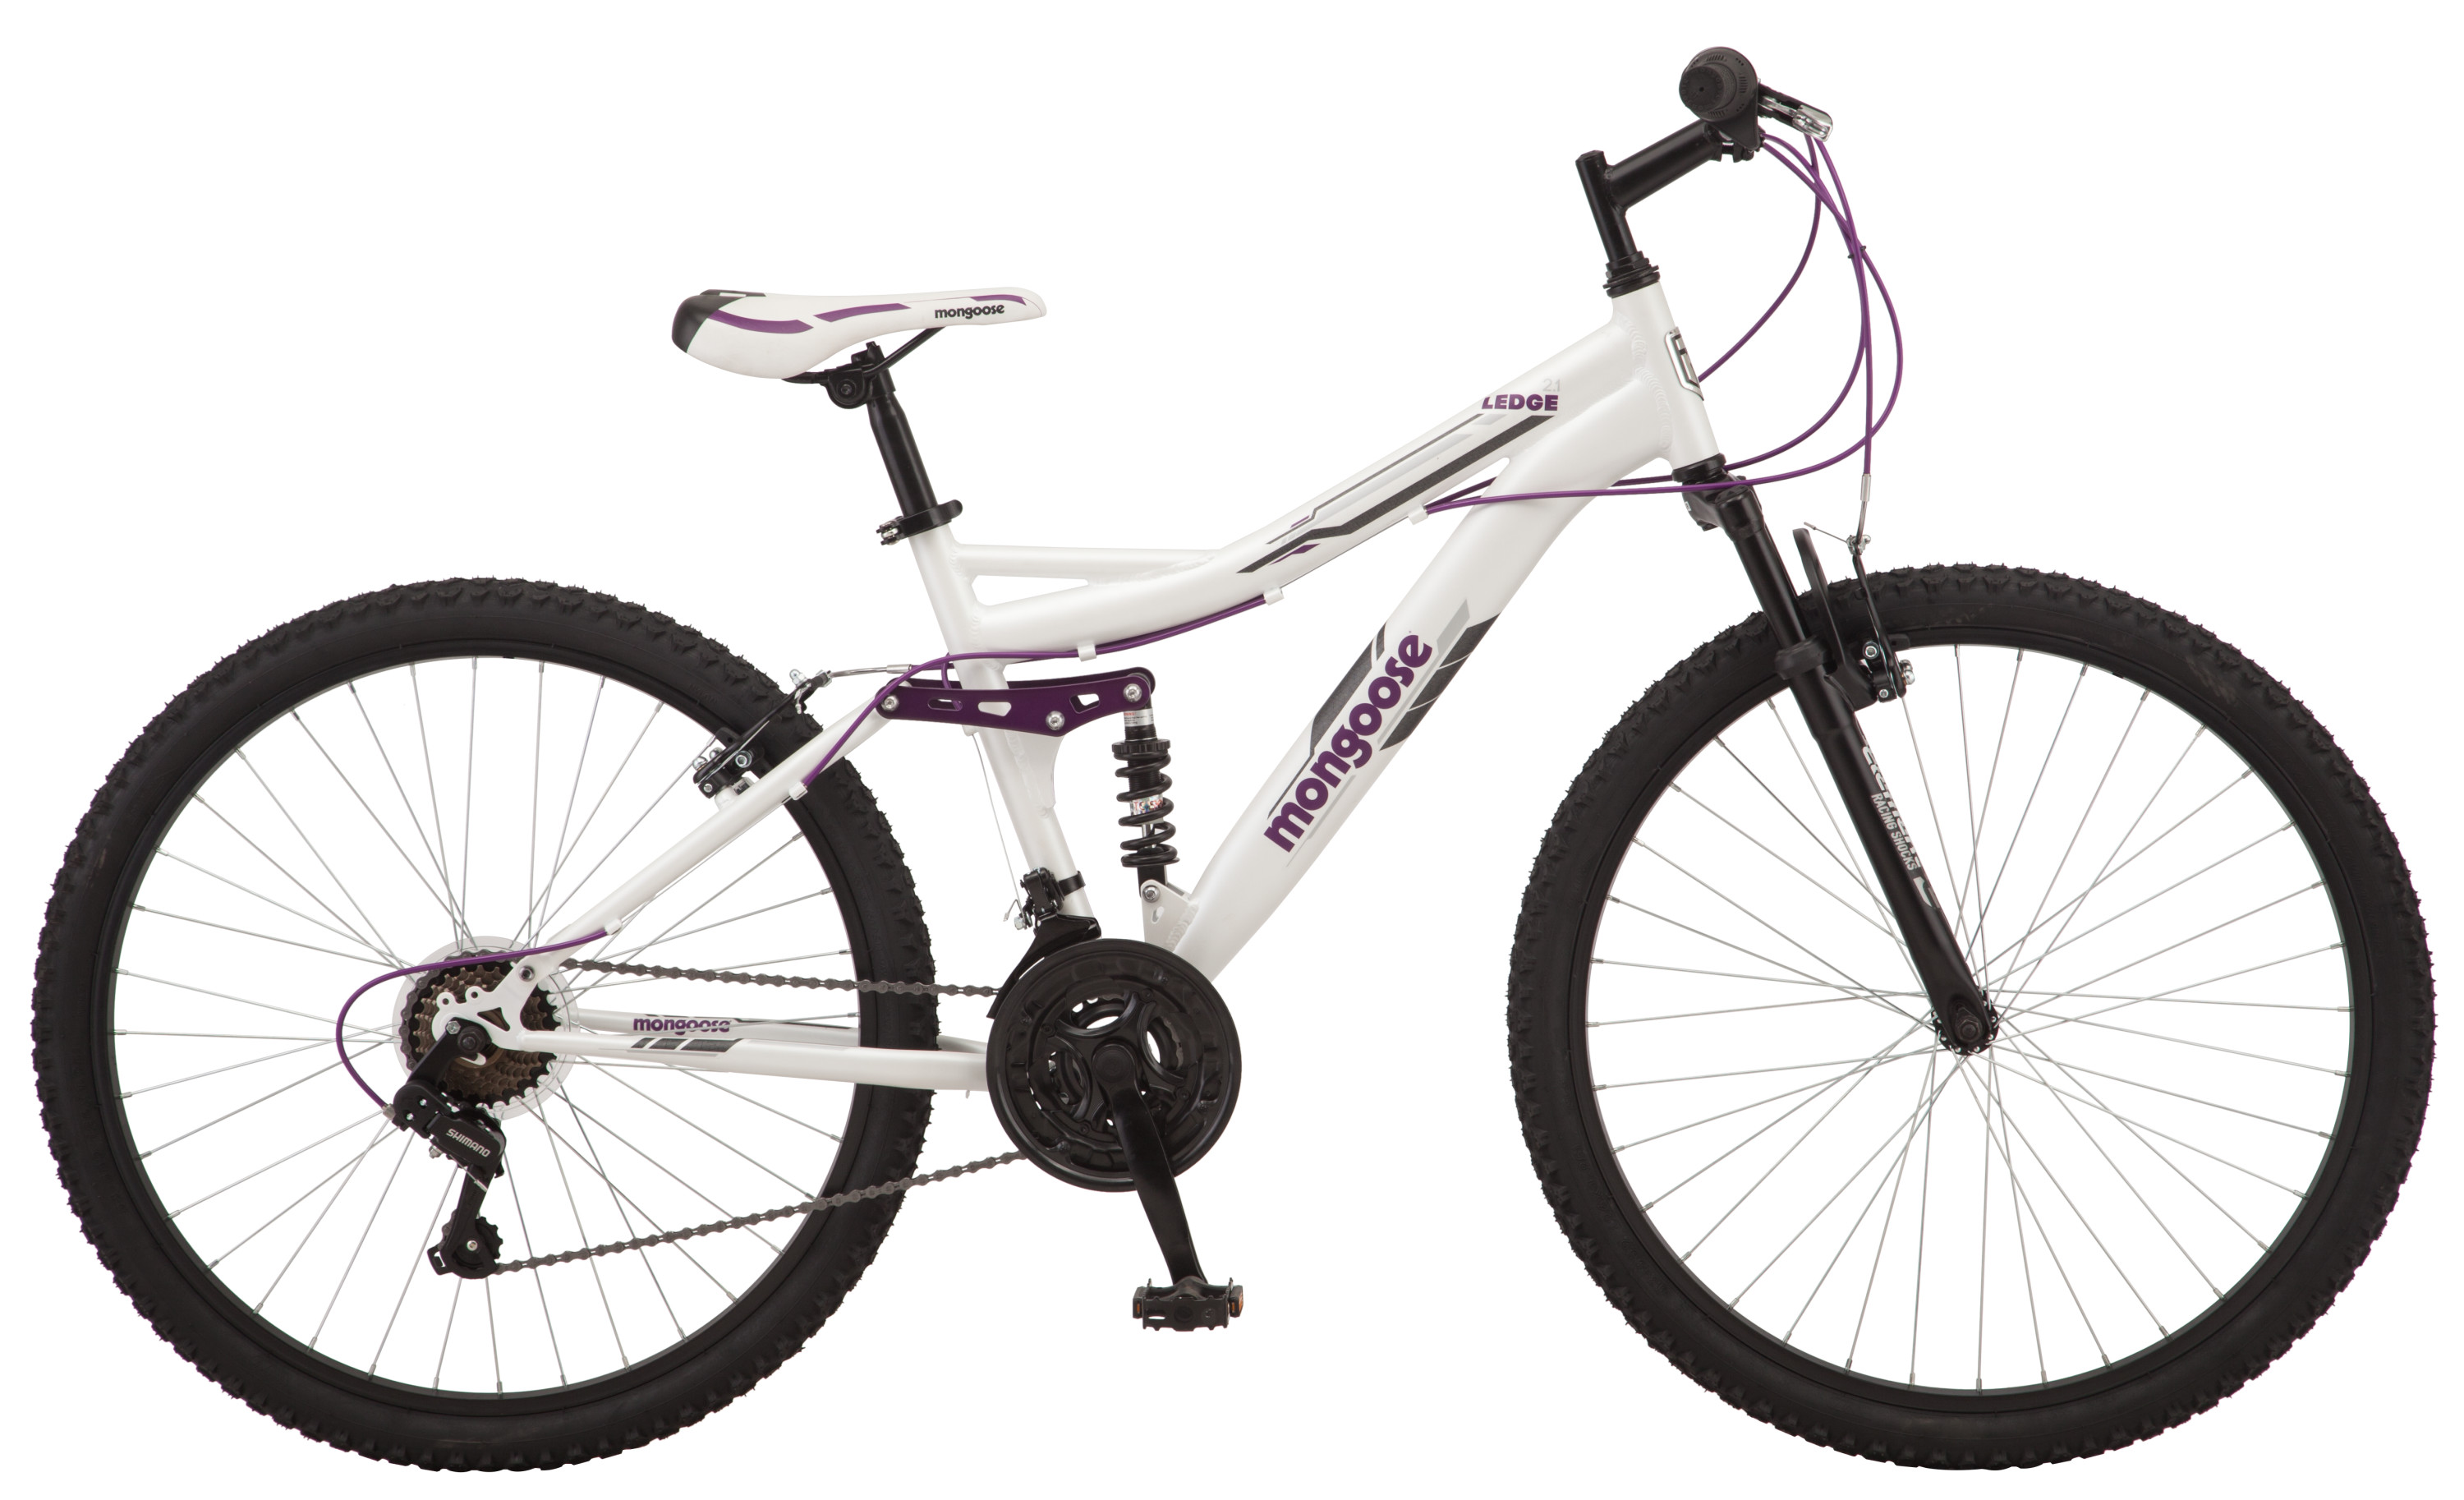 Mongoose Ledge 2.1 Mountain Bike, 26-inch wheels, 21 speeds, womens frame, white - image 3 of 7